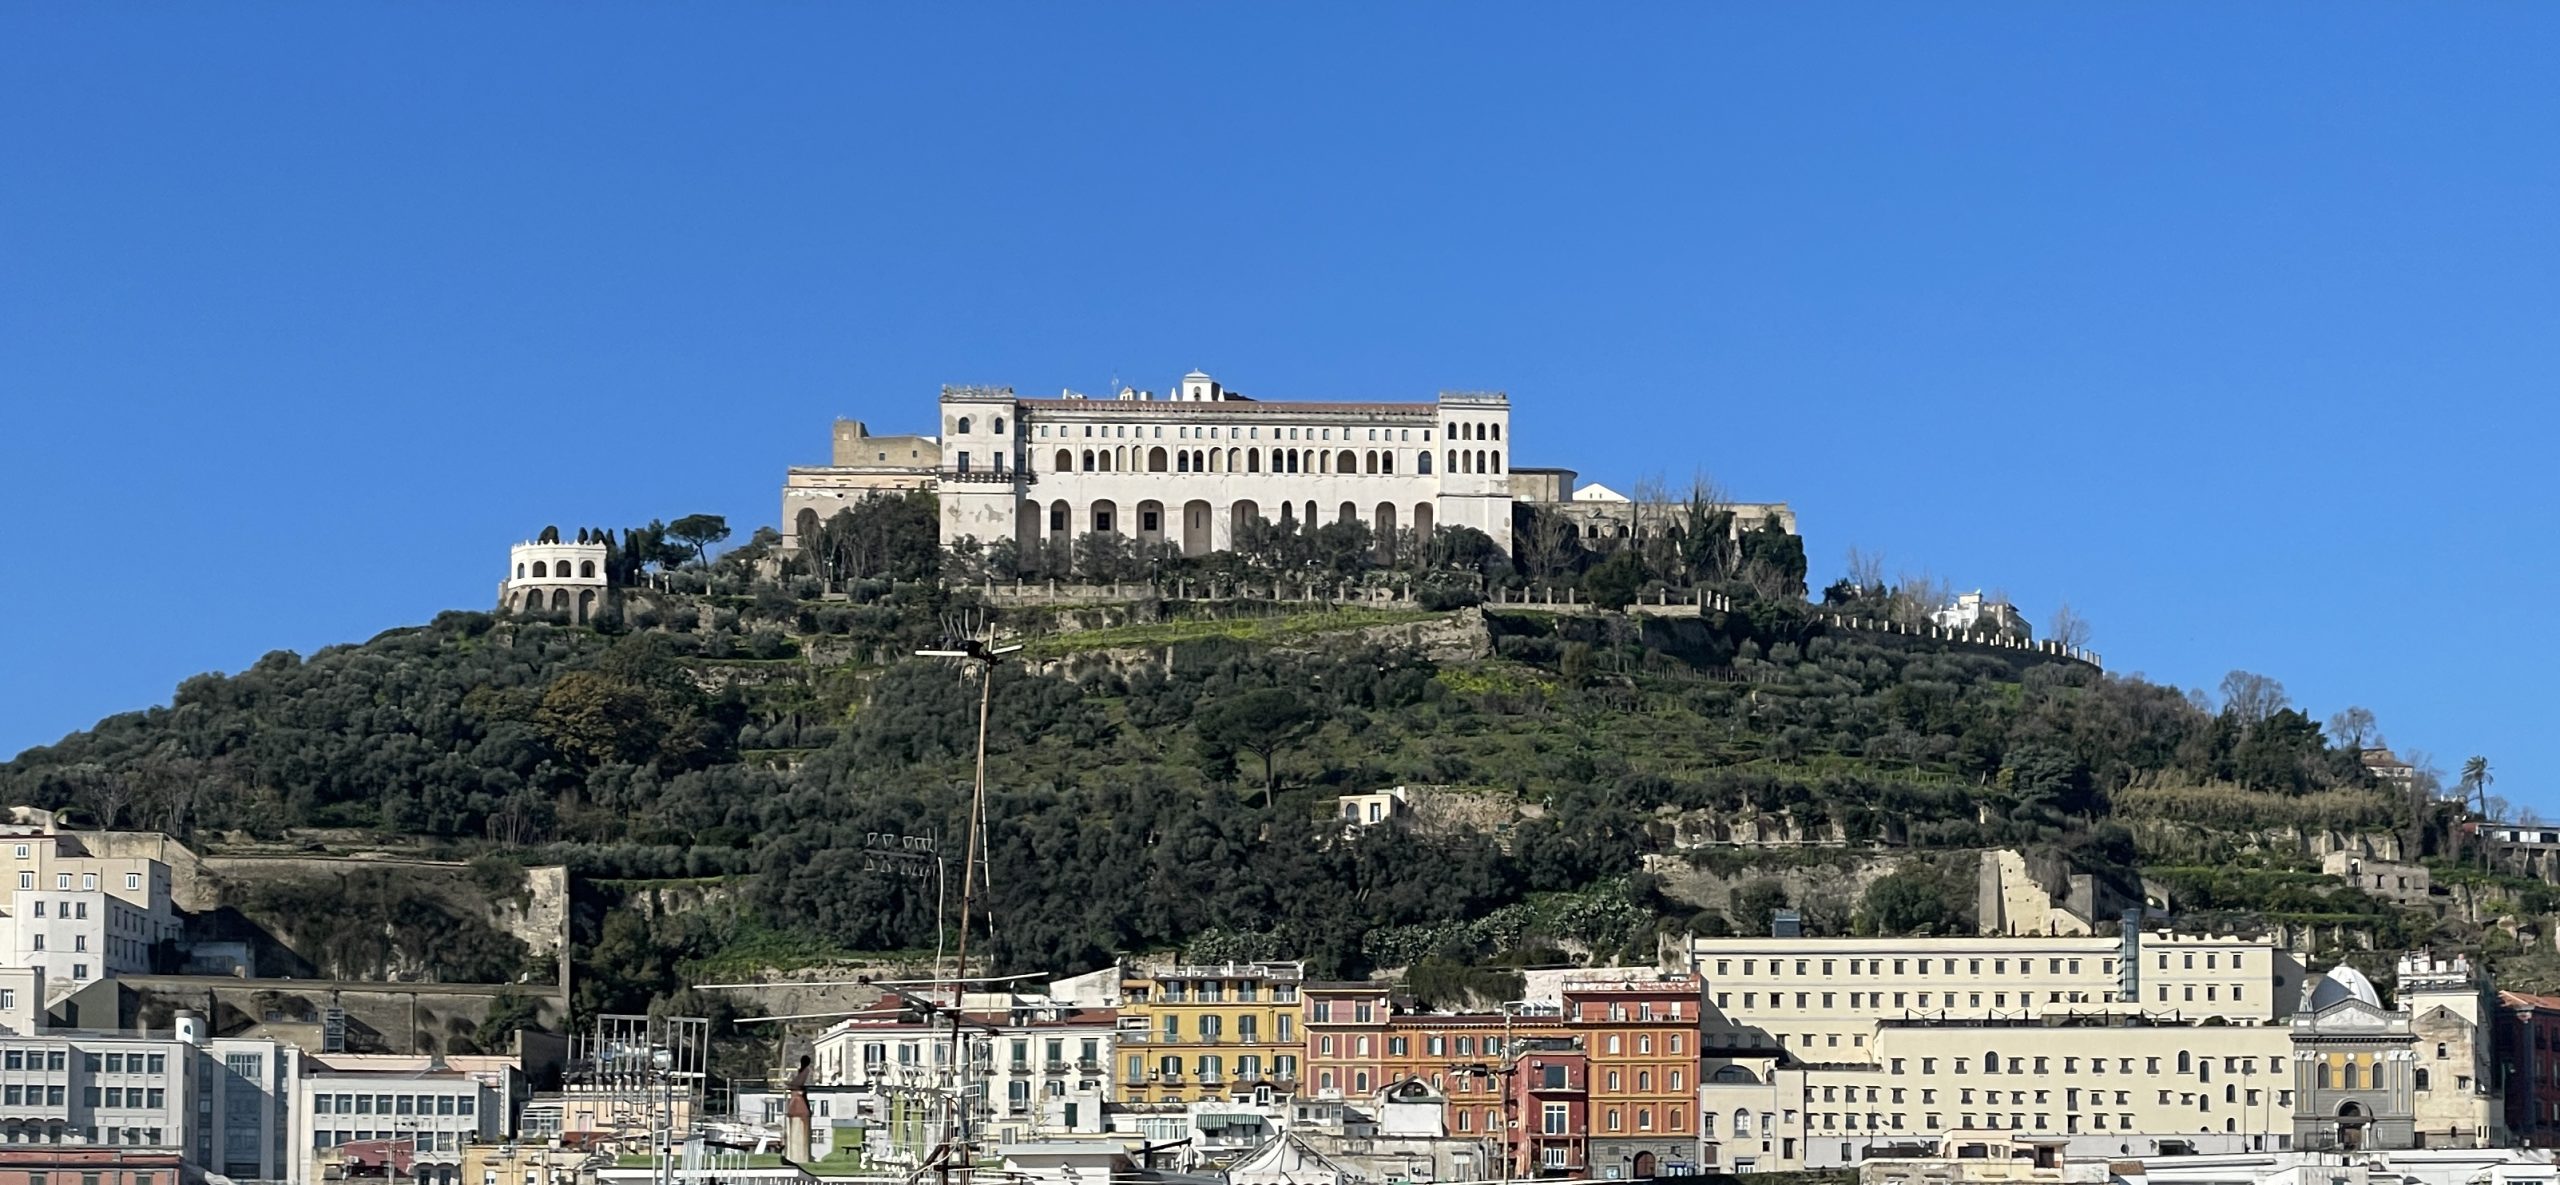 Castel Sant'Elmo in Naples